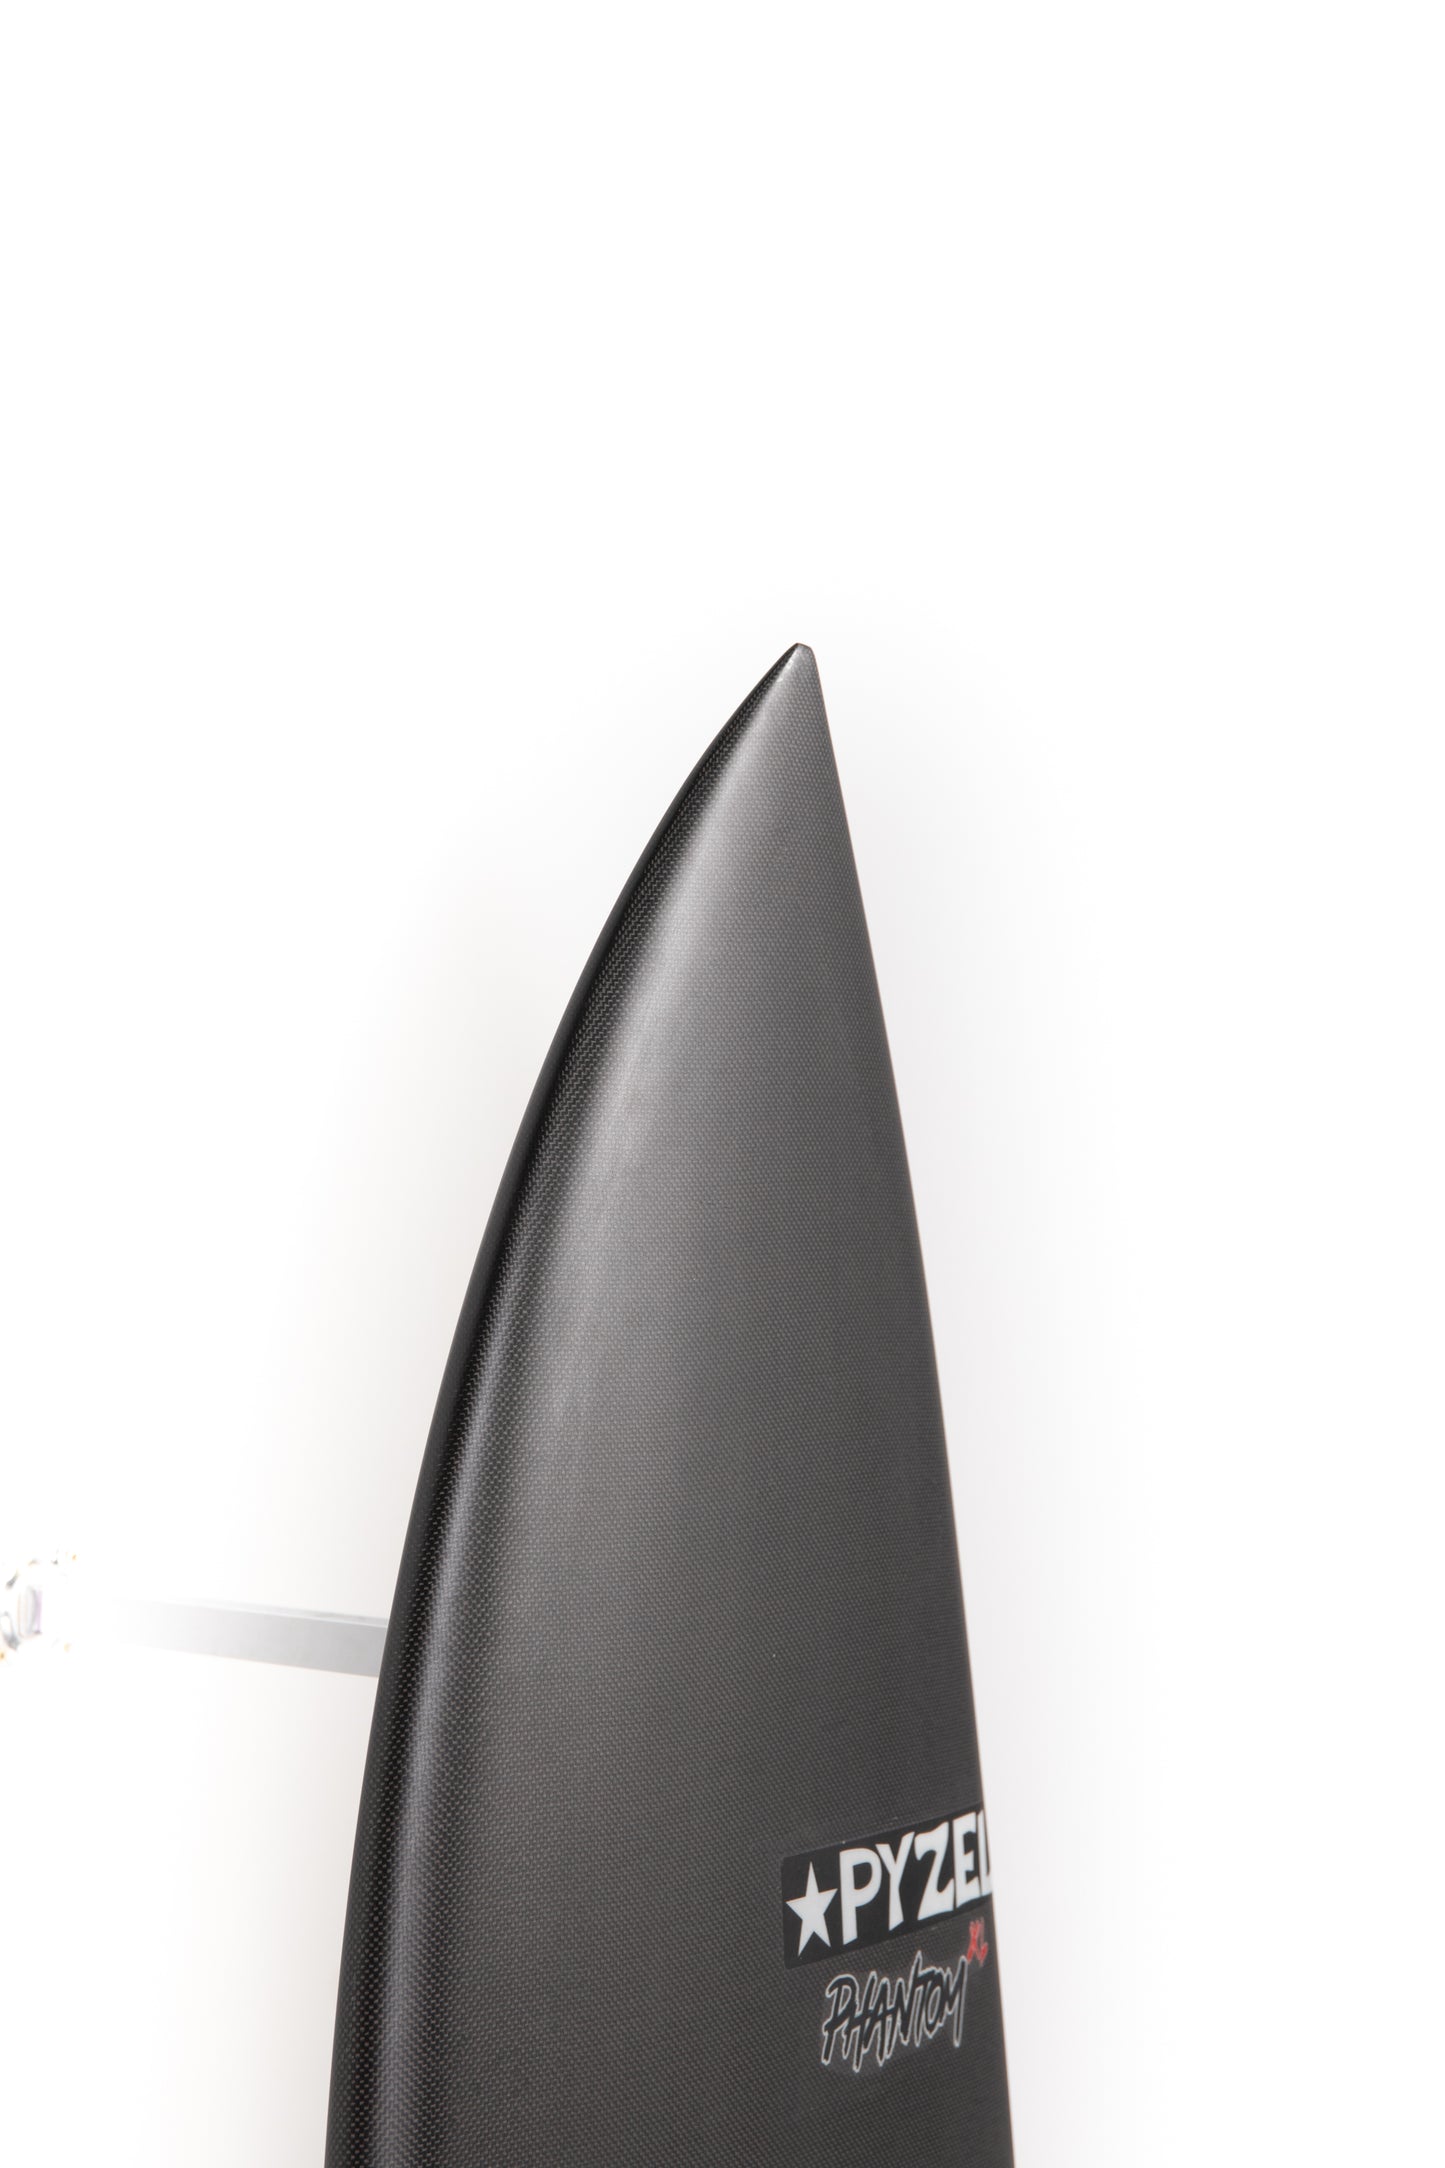 
                  
                    Pyzel Surfboards - PHANTOM XL in Dark Arts - 5'8" x 19.375" x 2.5 - 29.3L
                  
                